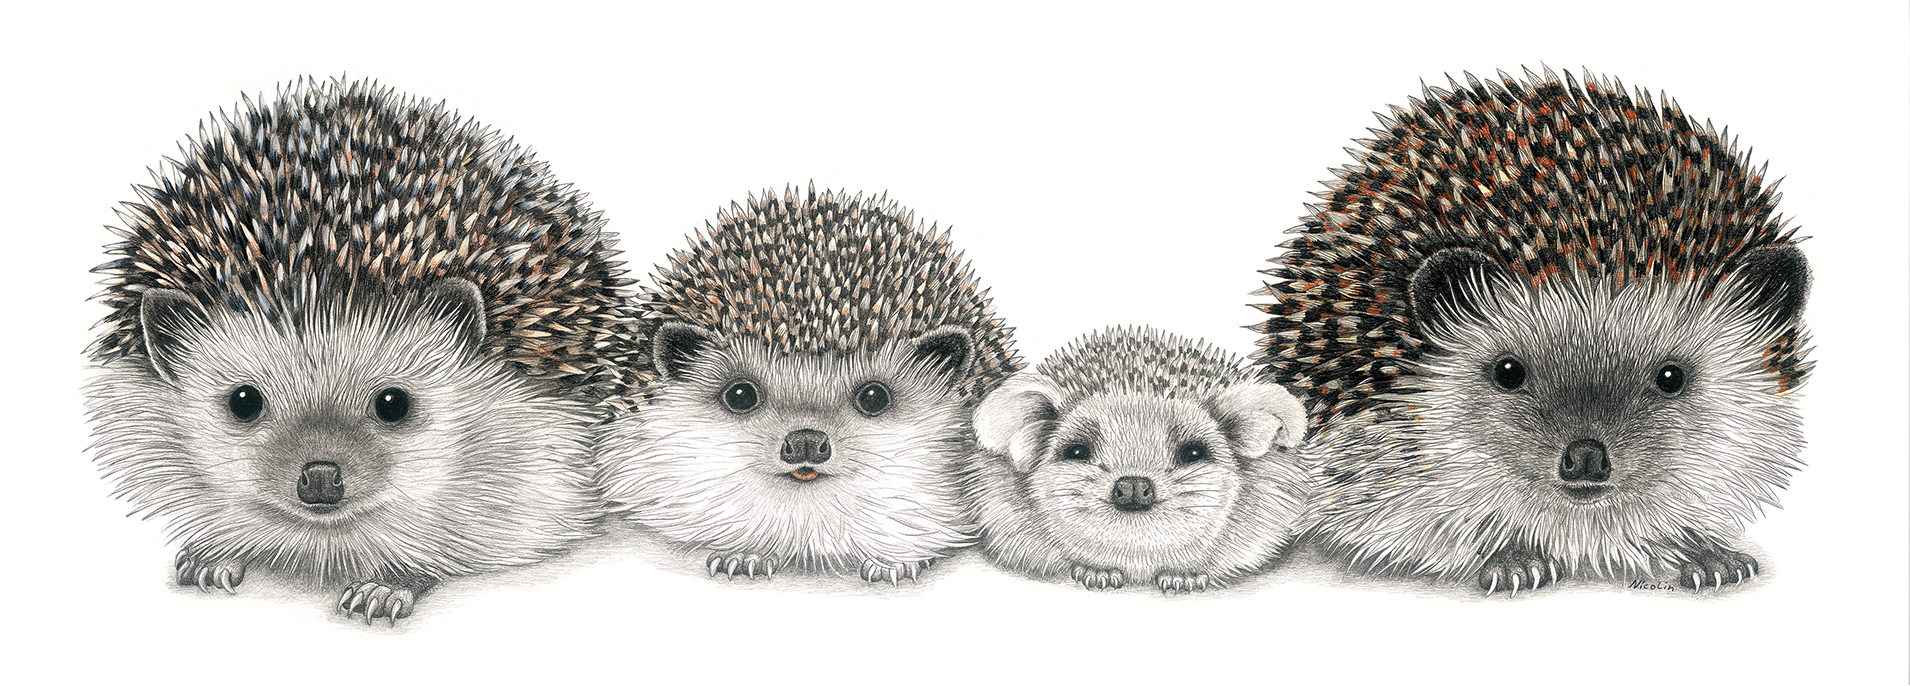 Everybody loves hedgehogs.